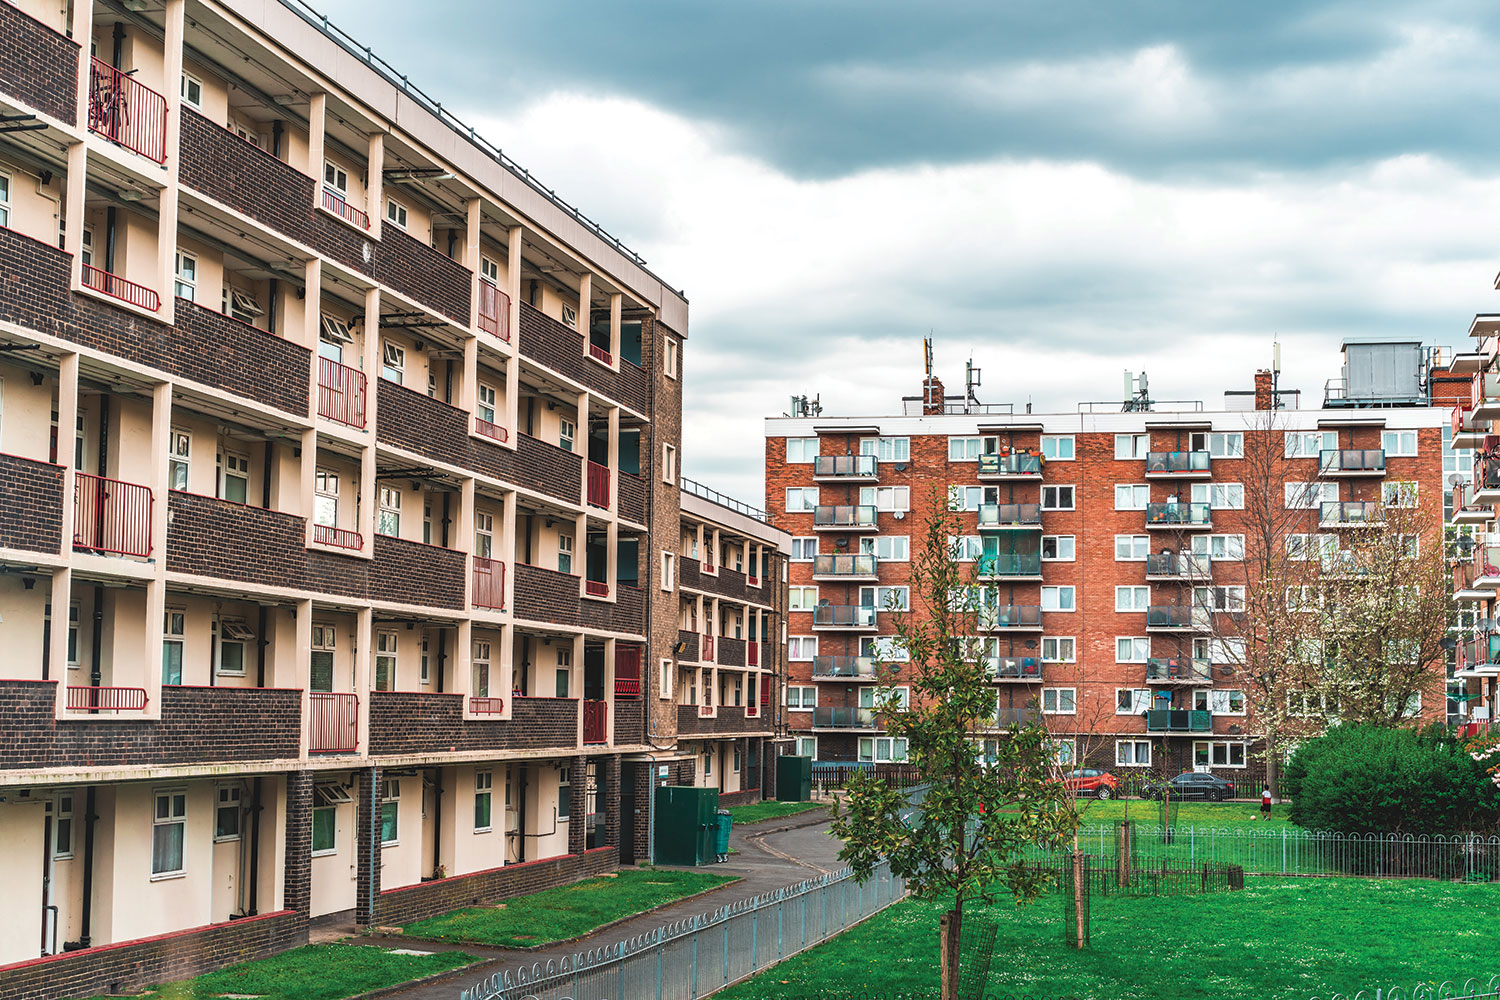 Photo of social housing flats.